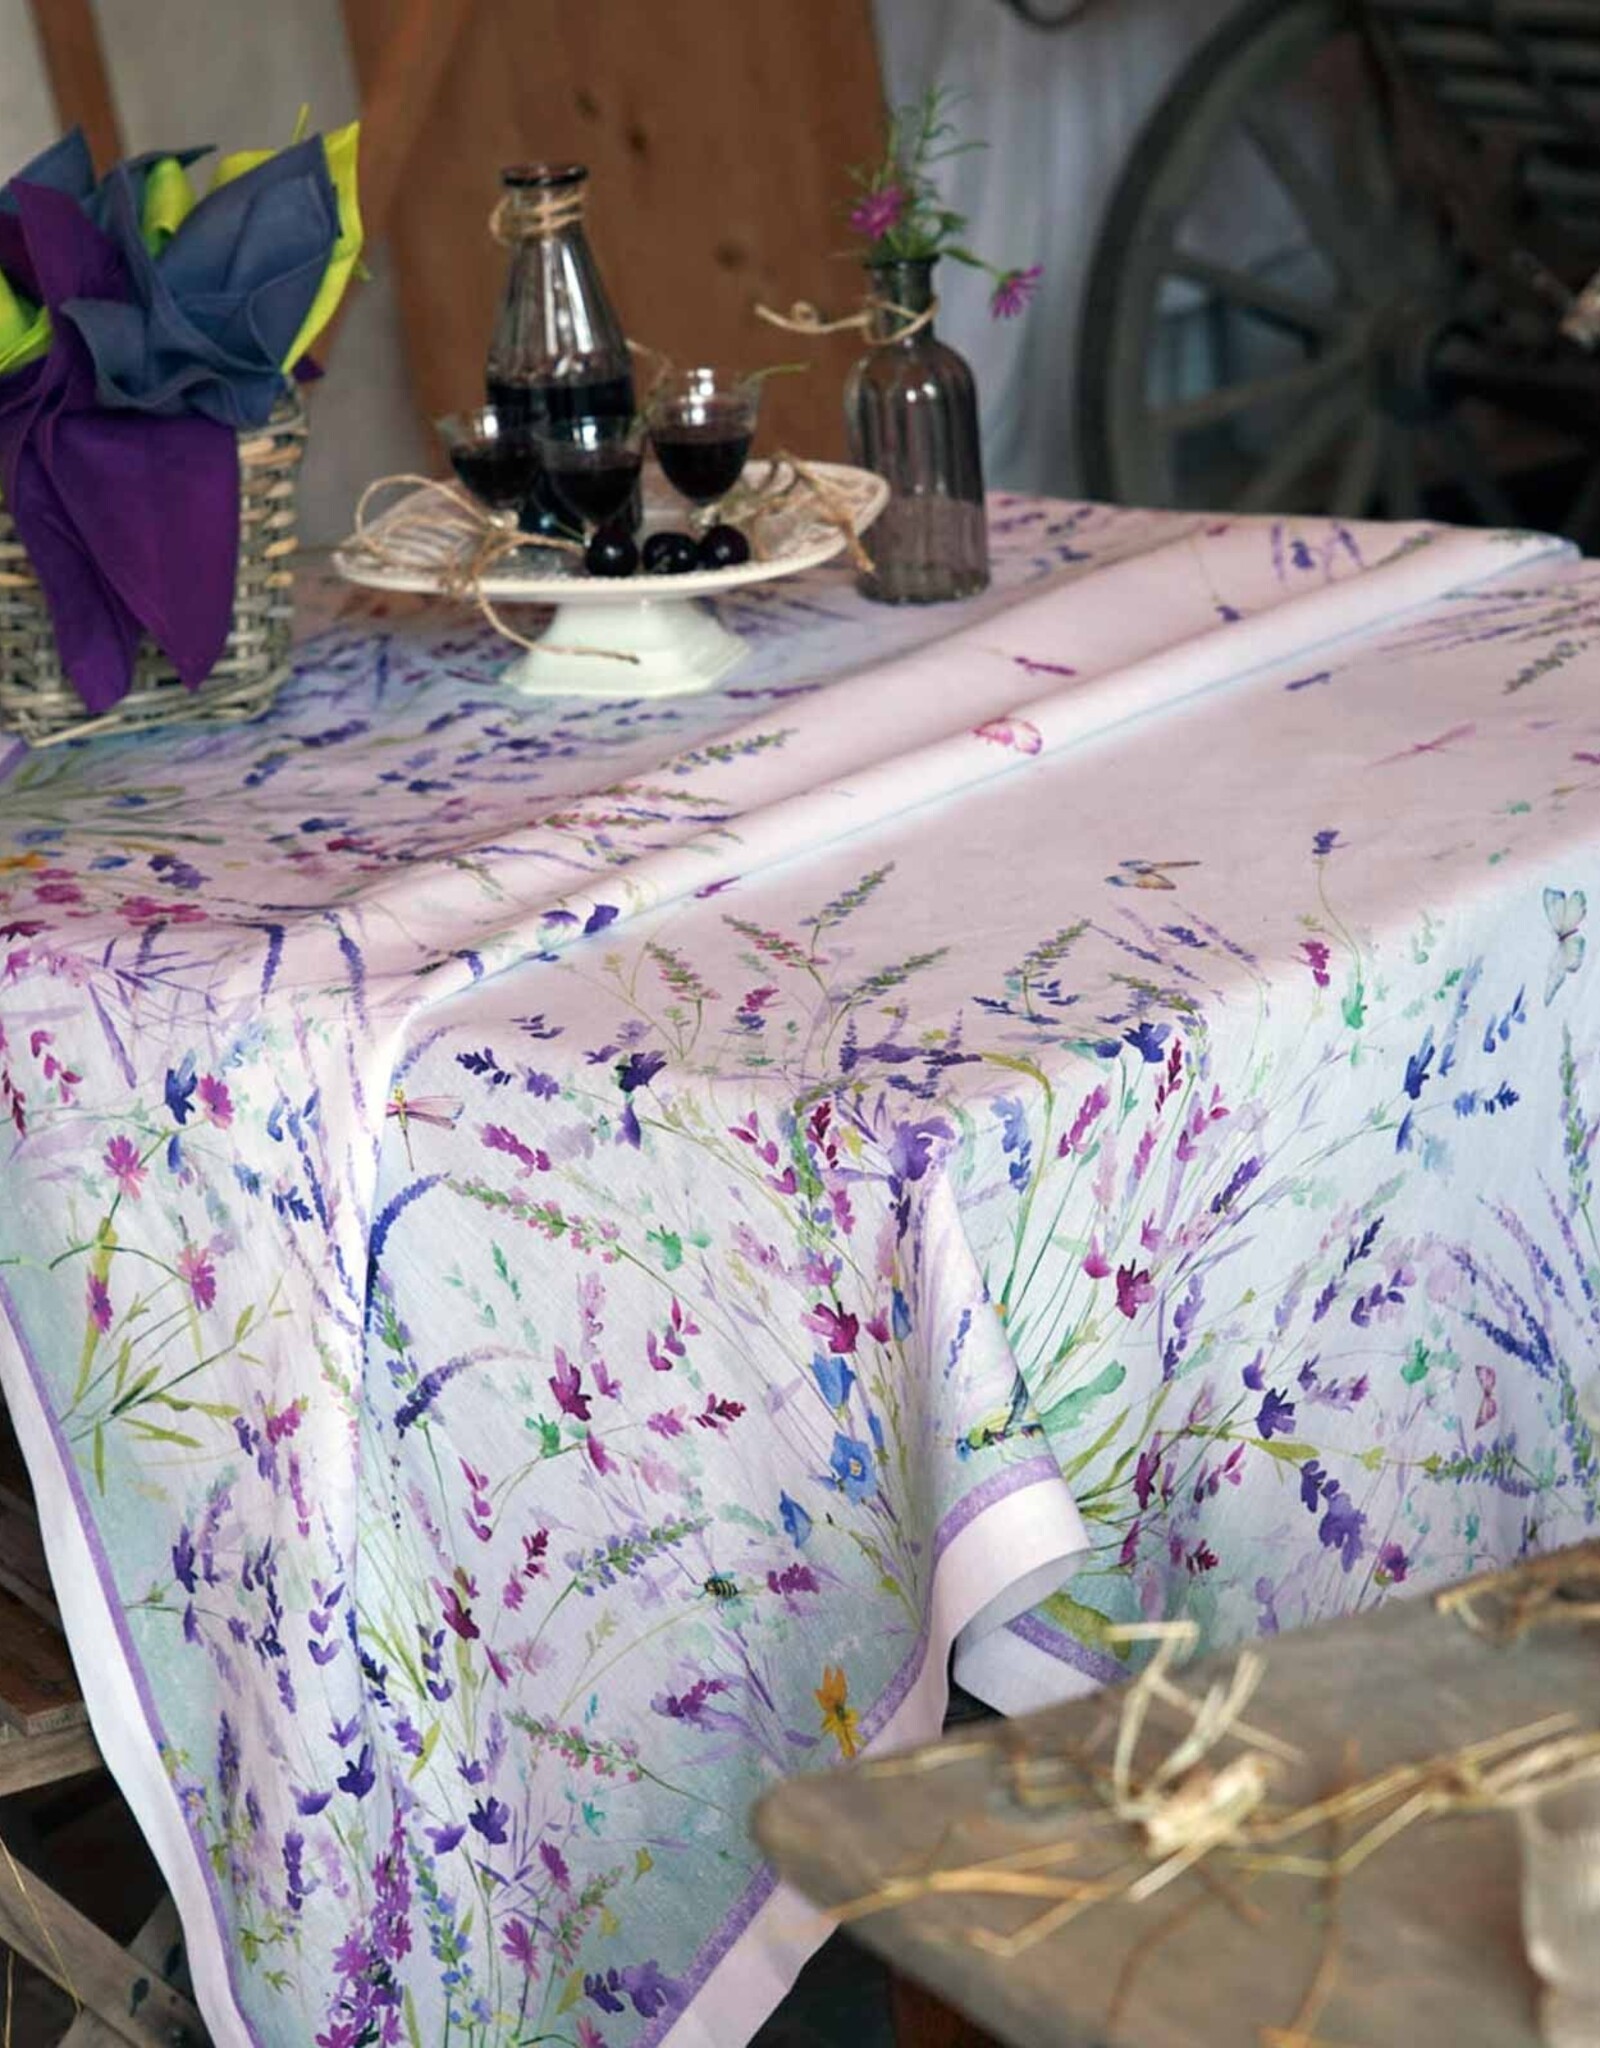 Italian Linen - Spigo Tablecloth -  67" x 67"